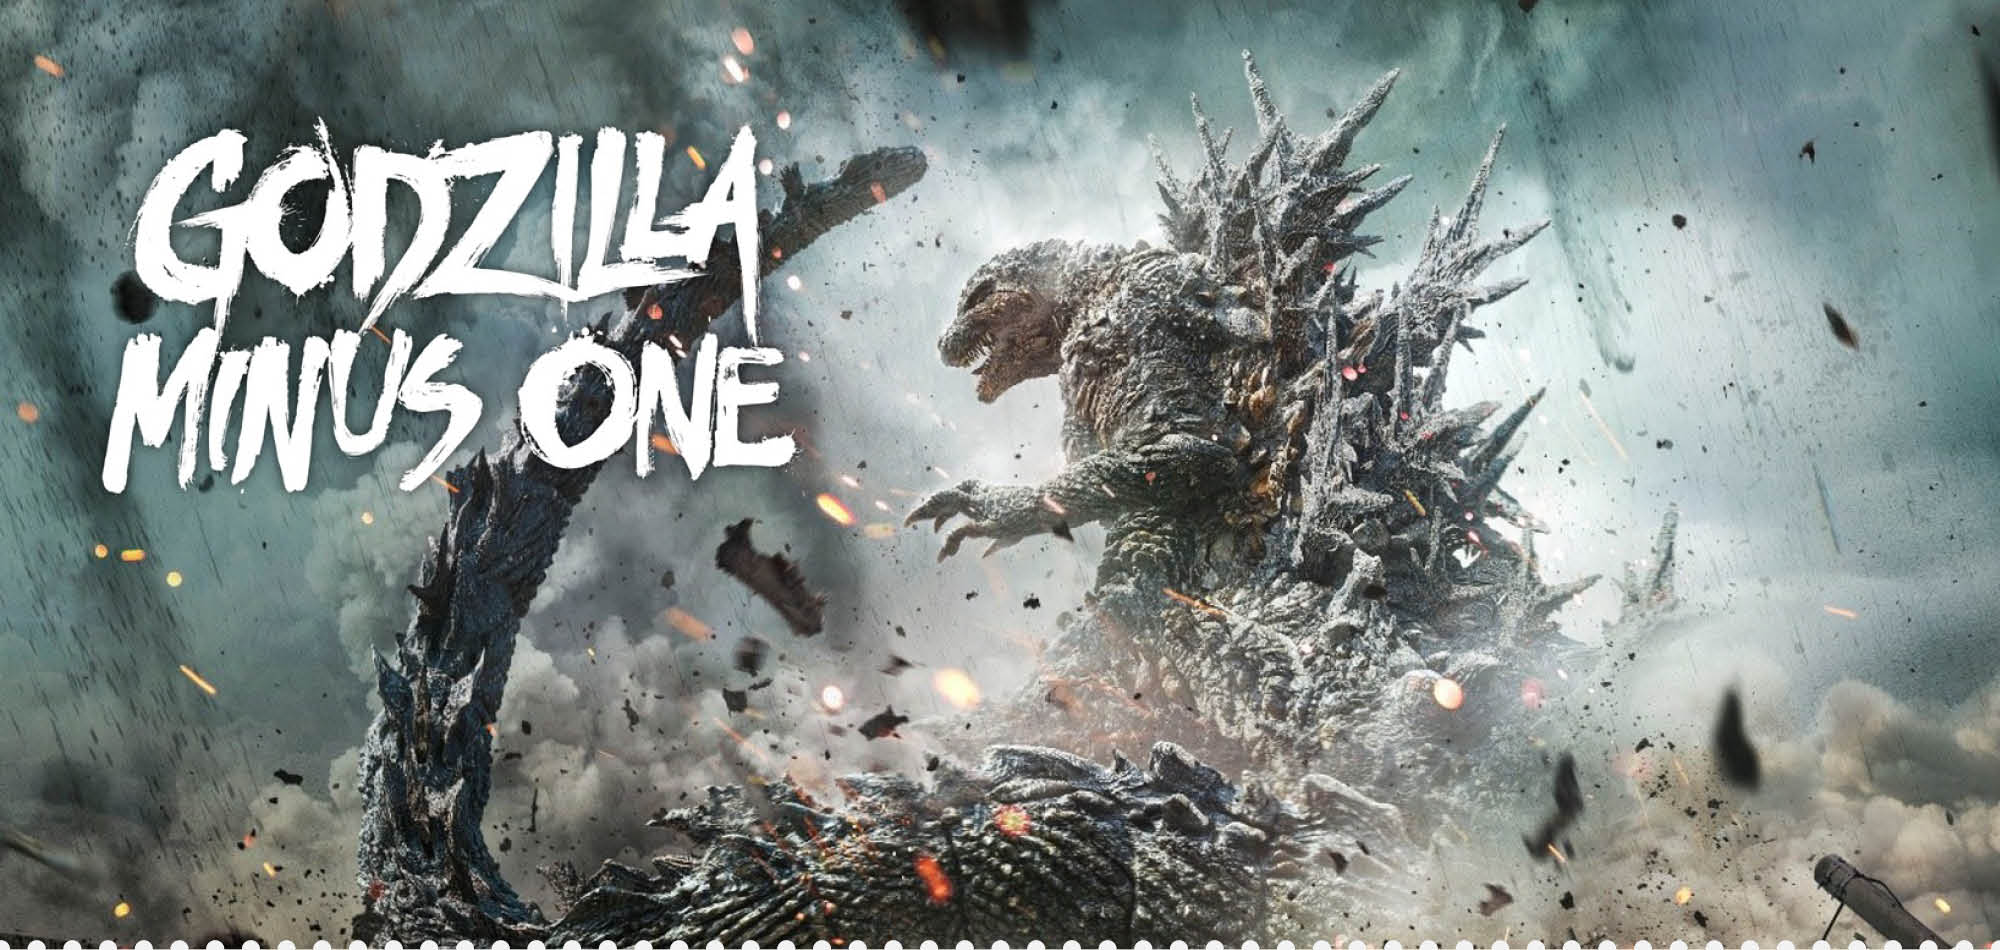 Godzilla Minus One monopol